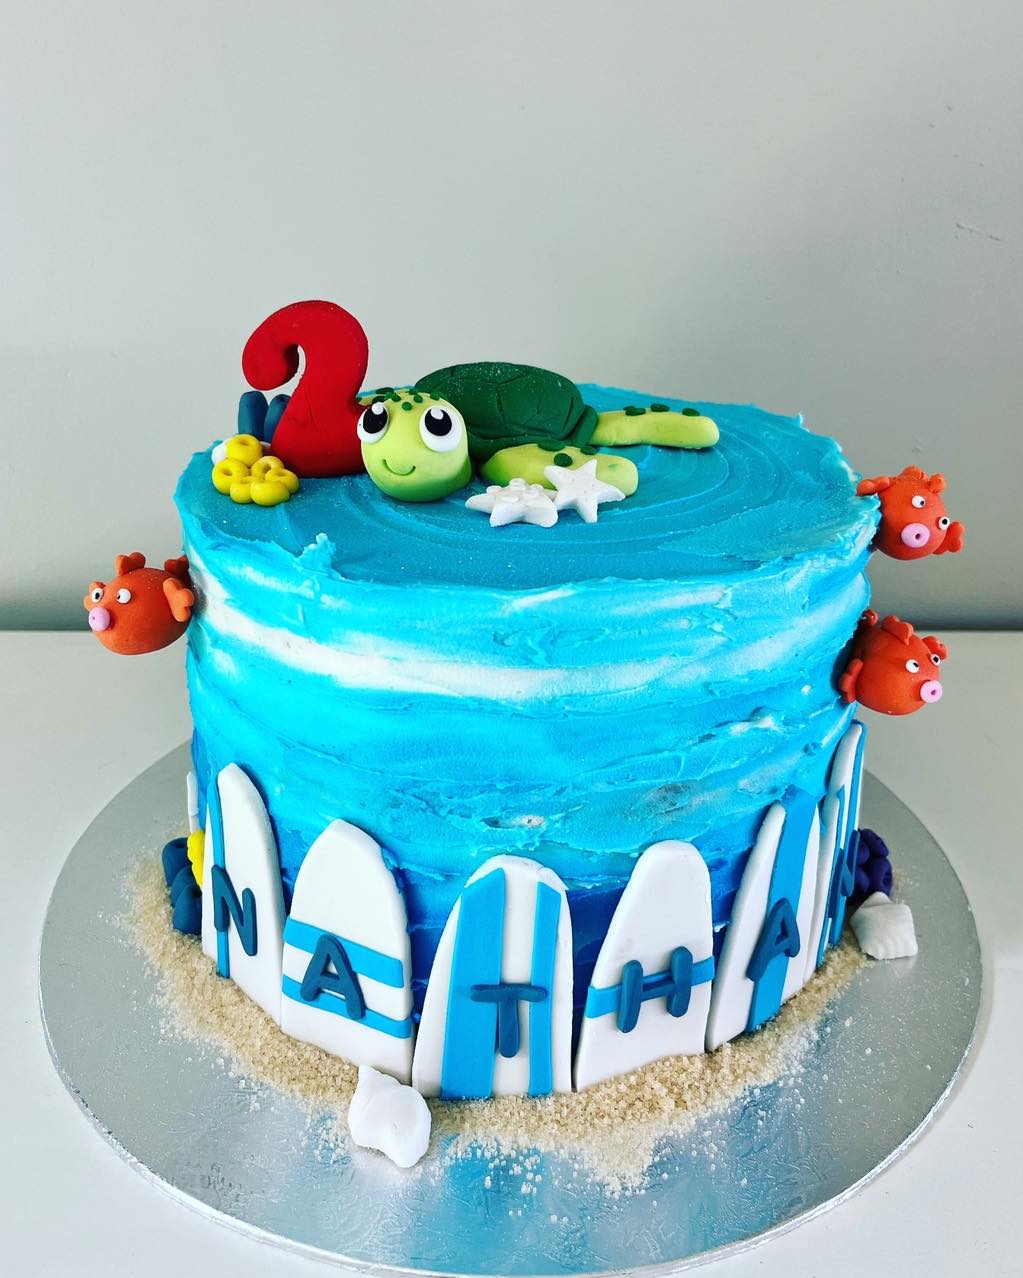 Sea turtle cake, cape town cakes, novelty cakes, birthday cakes, southern peninsula, cakes, seaturtle cake, ocean theme cake